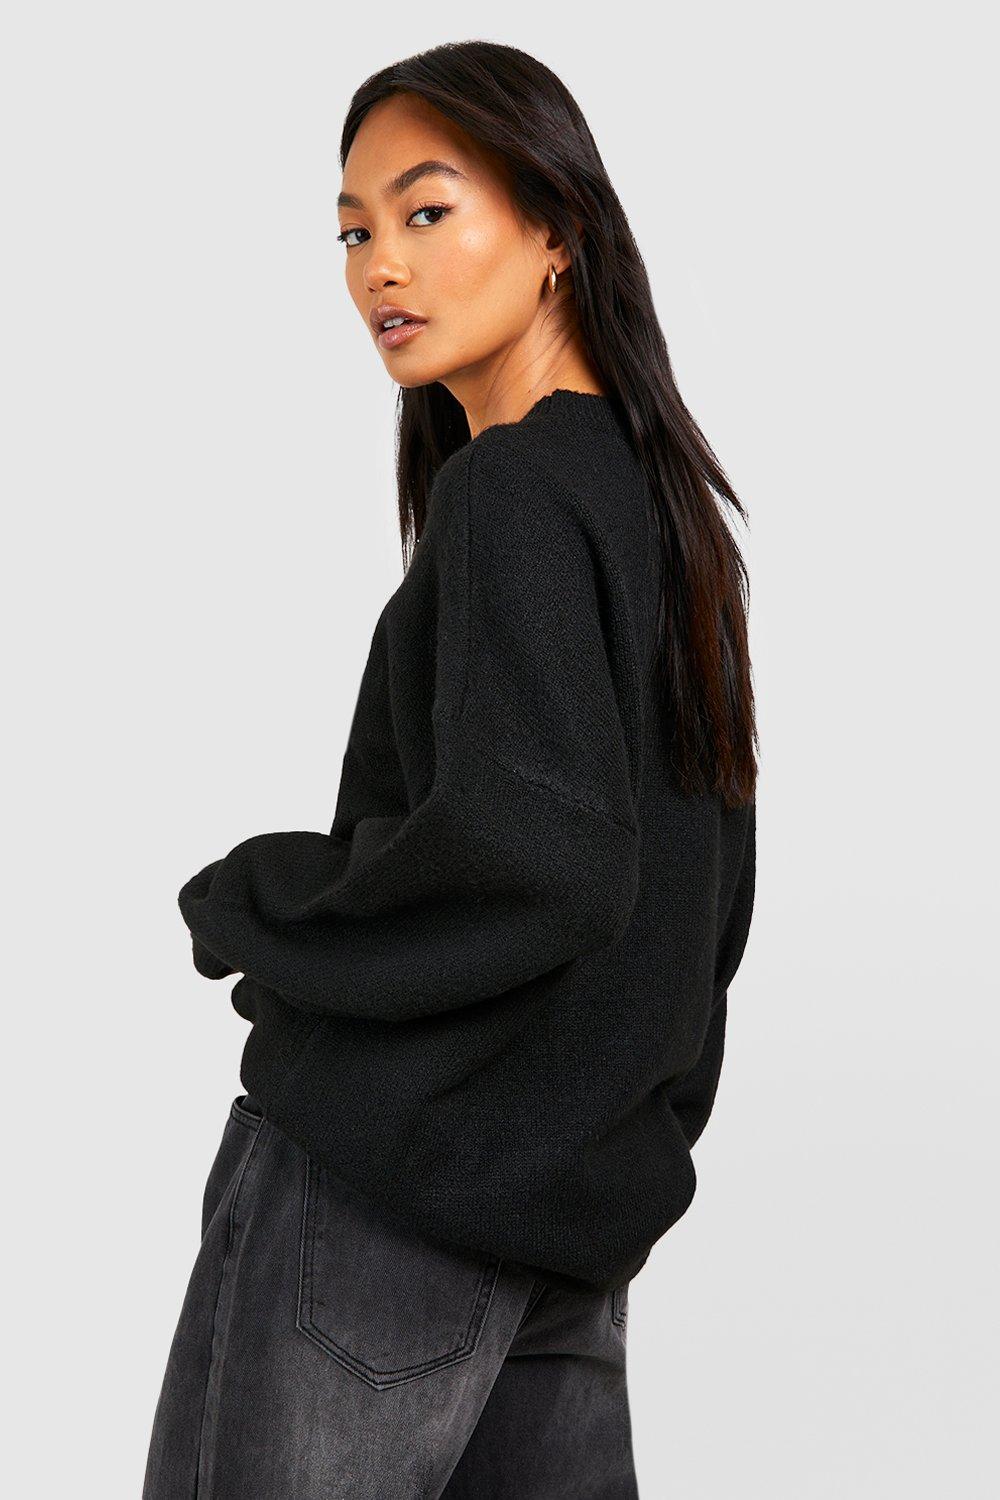 https://media.boohoo.com/i/boohoo/gzz57640_black_xl_1/female-black-soft-knit-longline-sweater